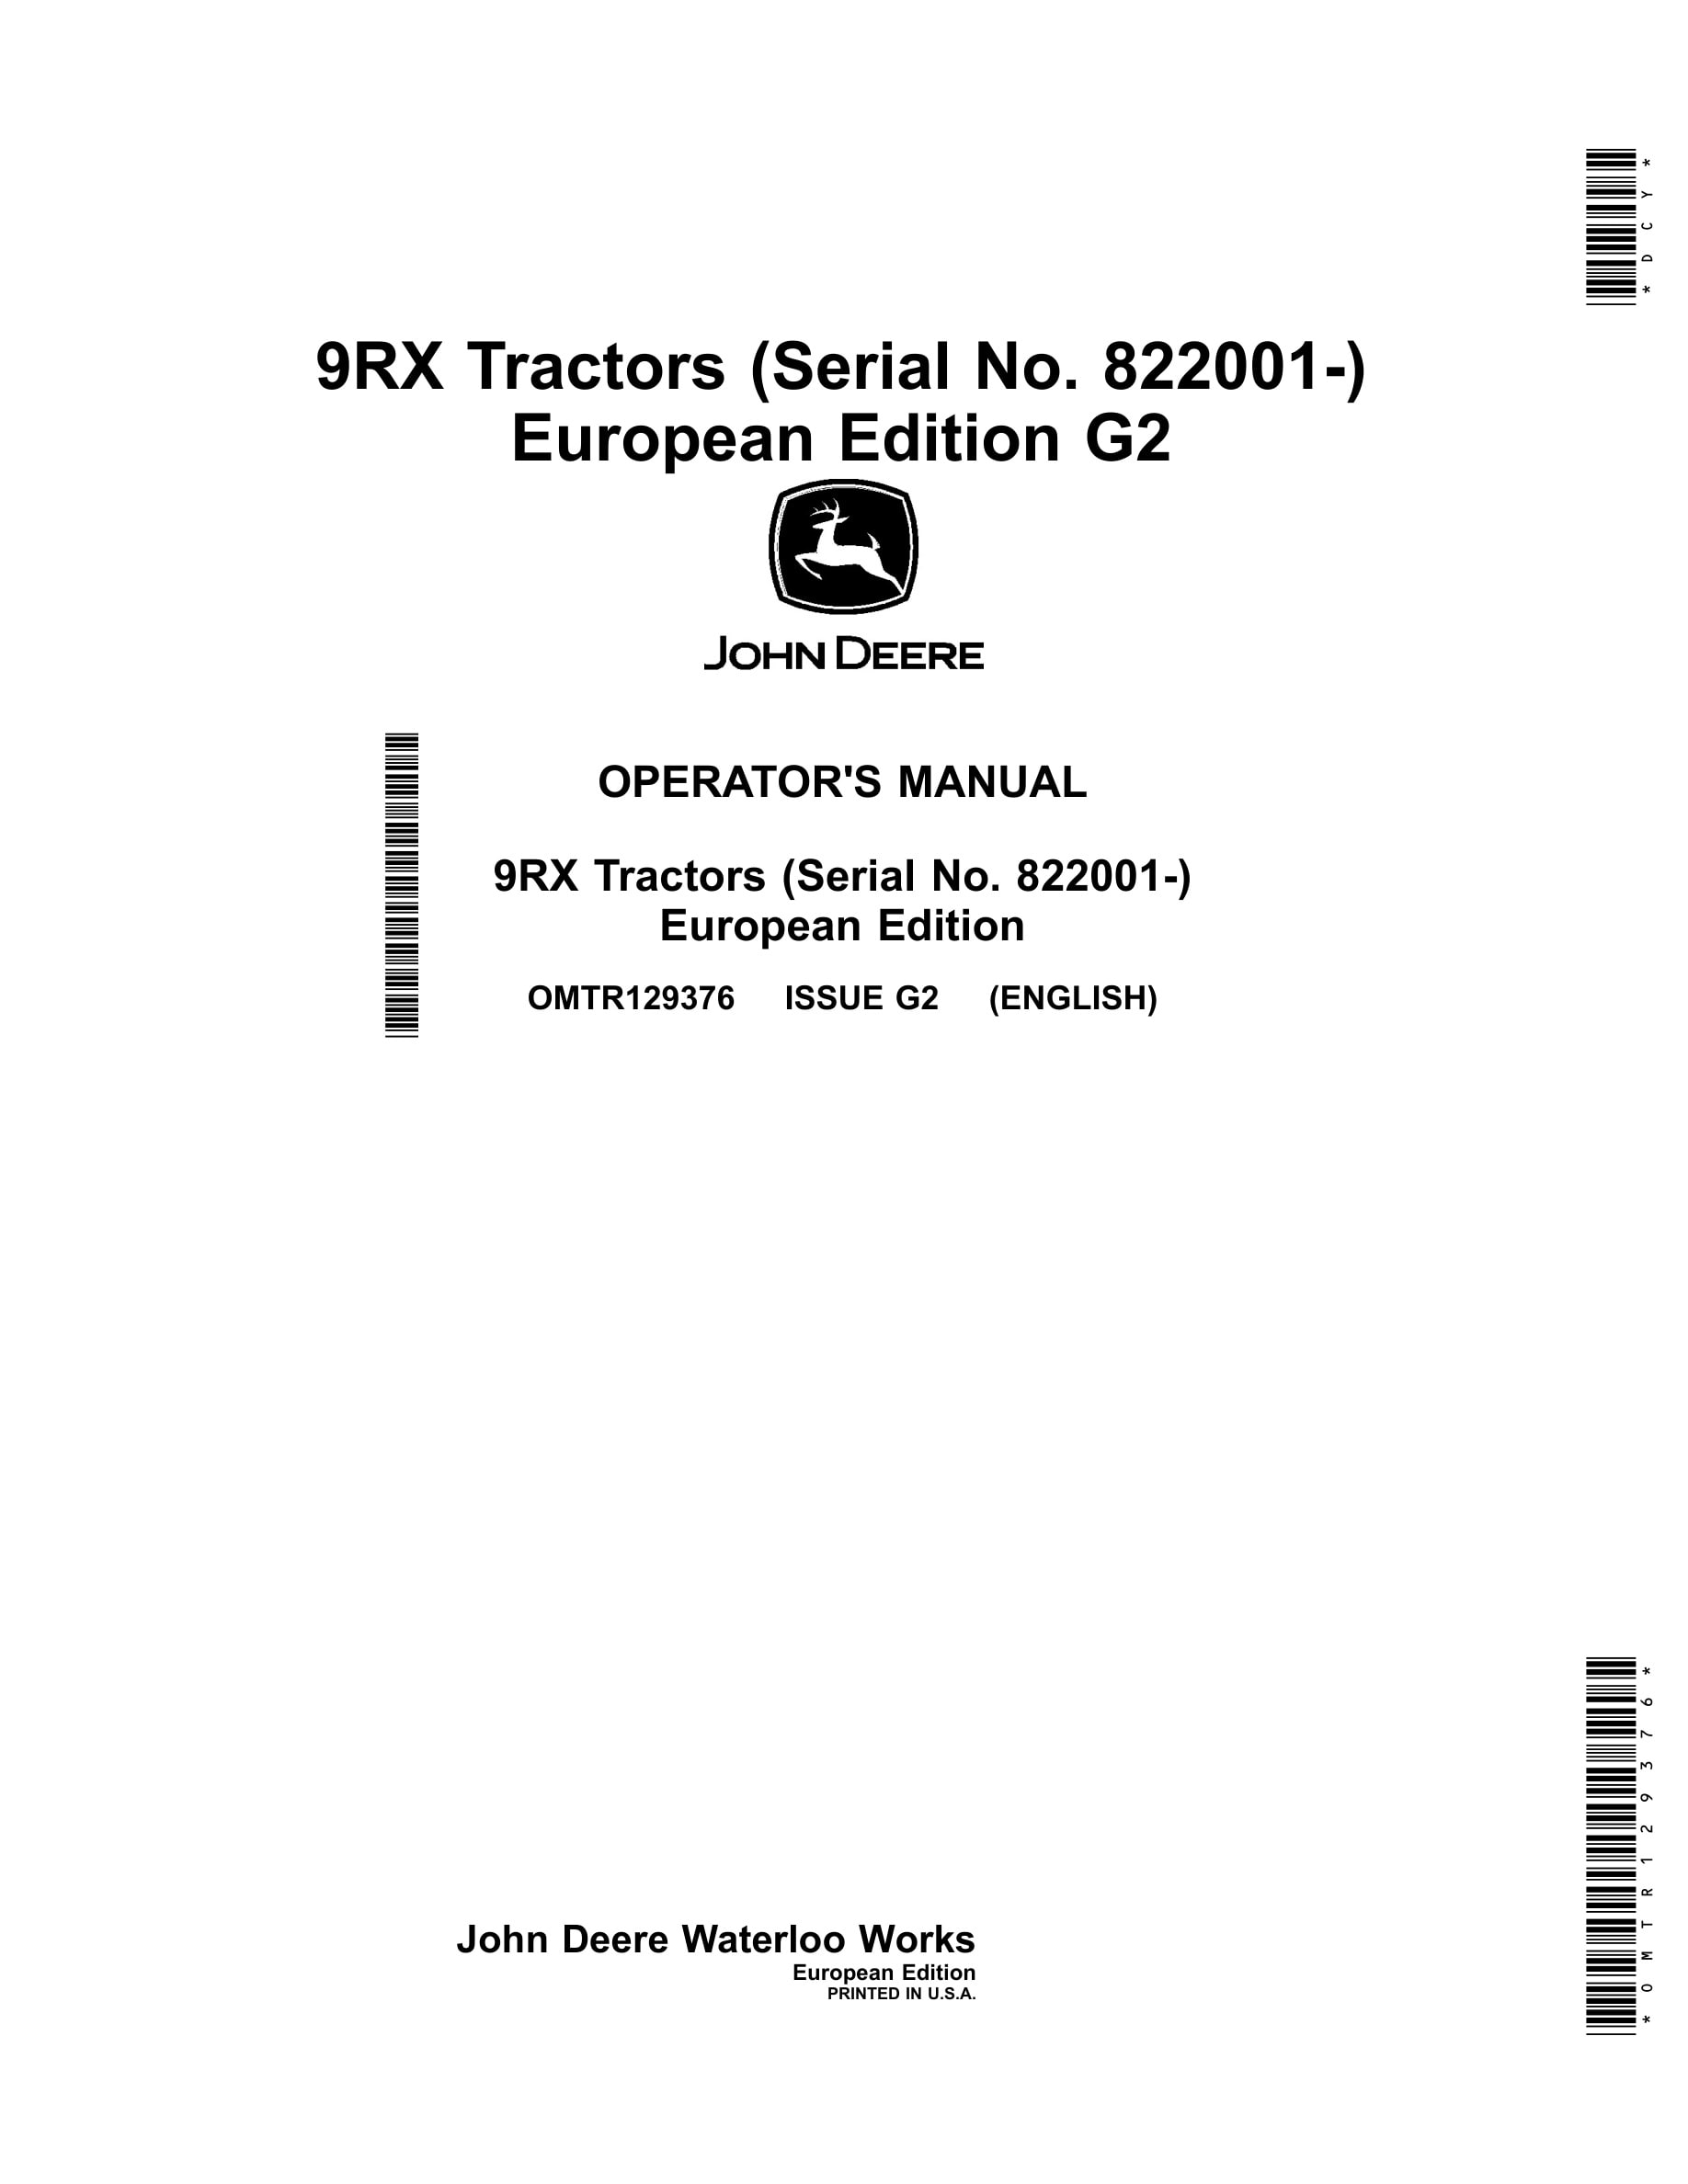 John Deere 9rx Tractors Operator Manuals OMTR129376-1